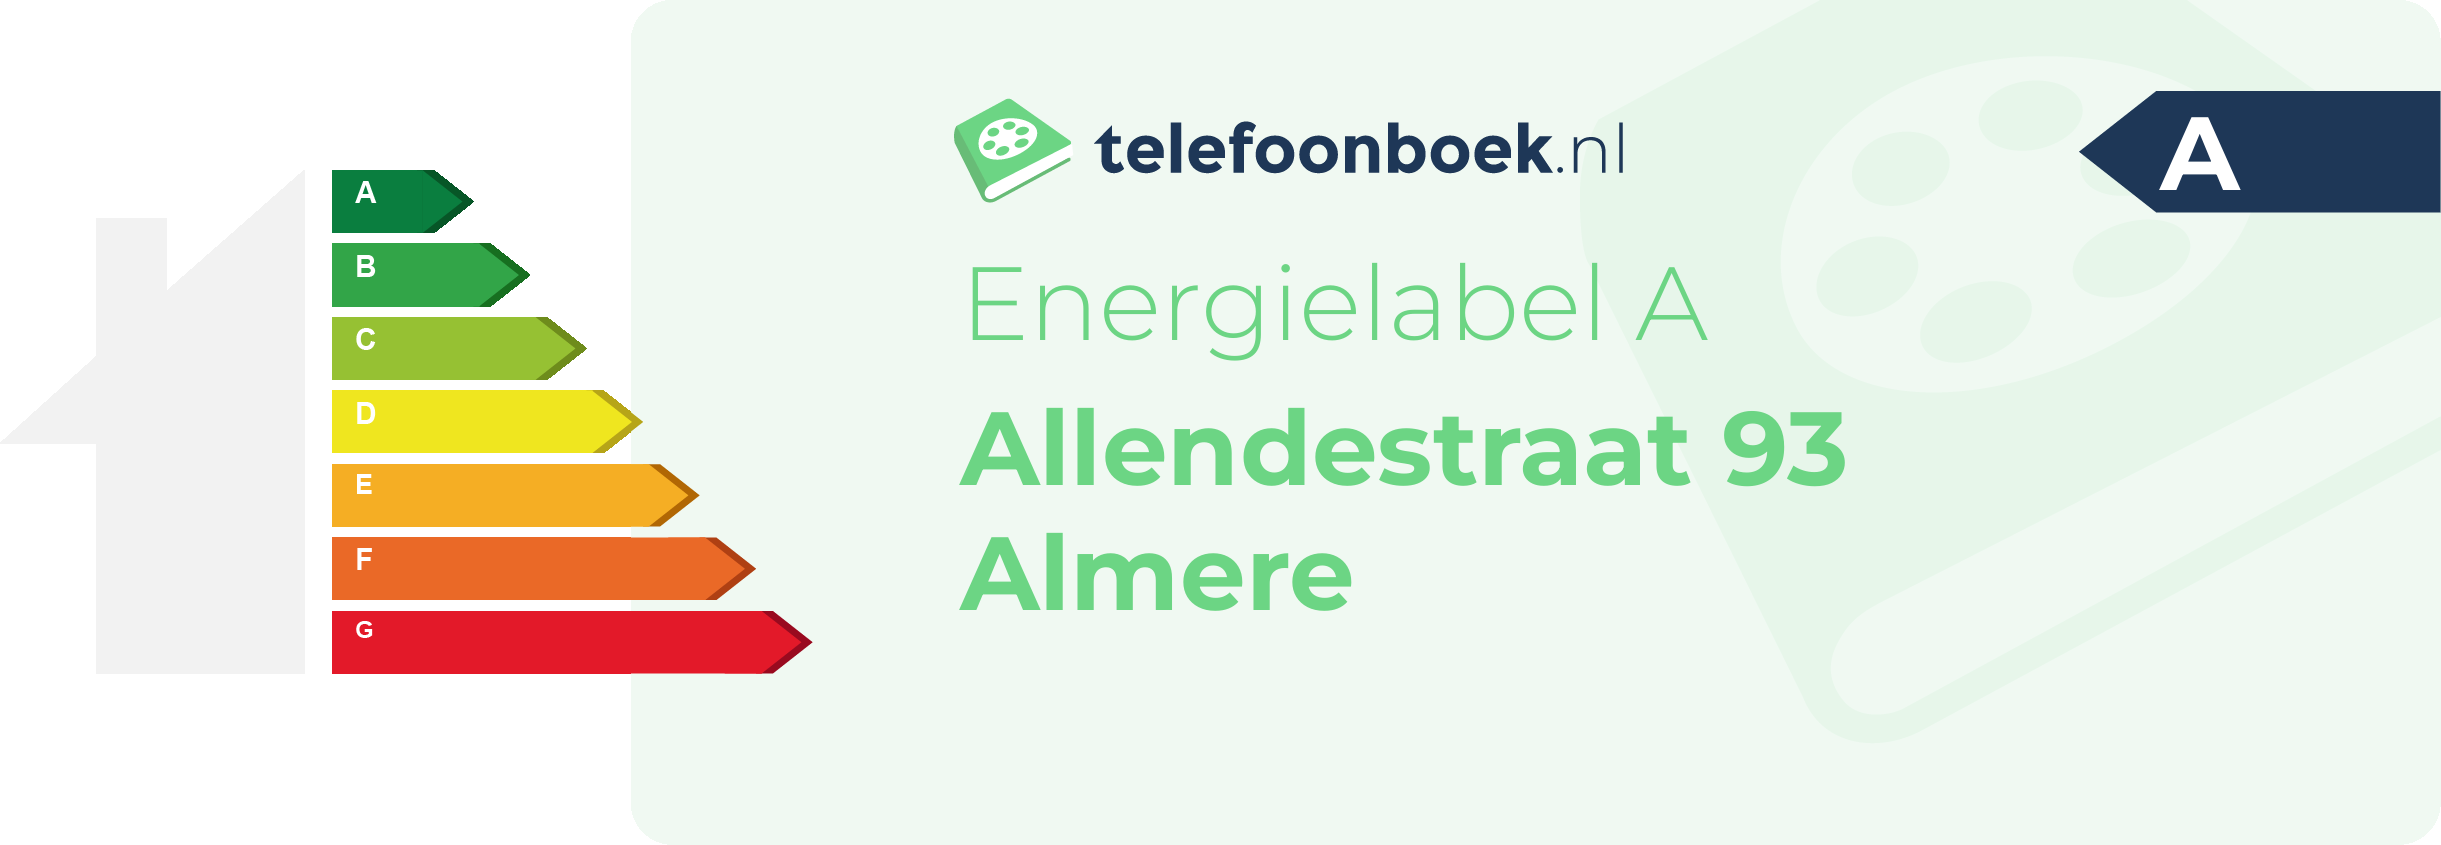 Energielabel Allendestraat 93 Almere